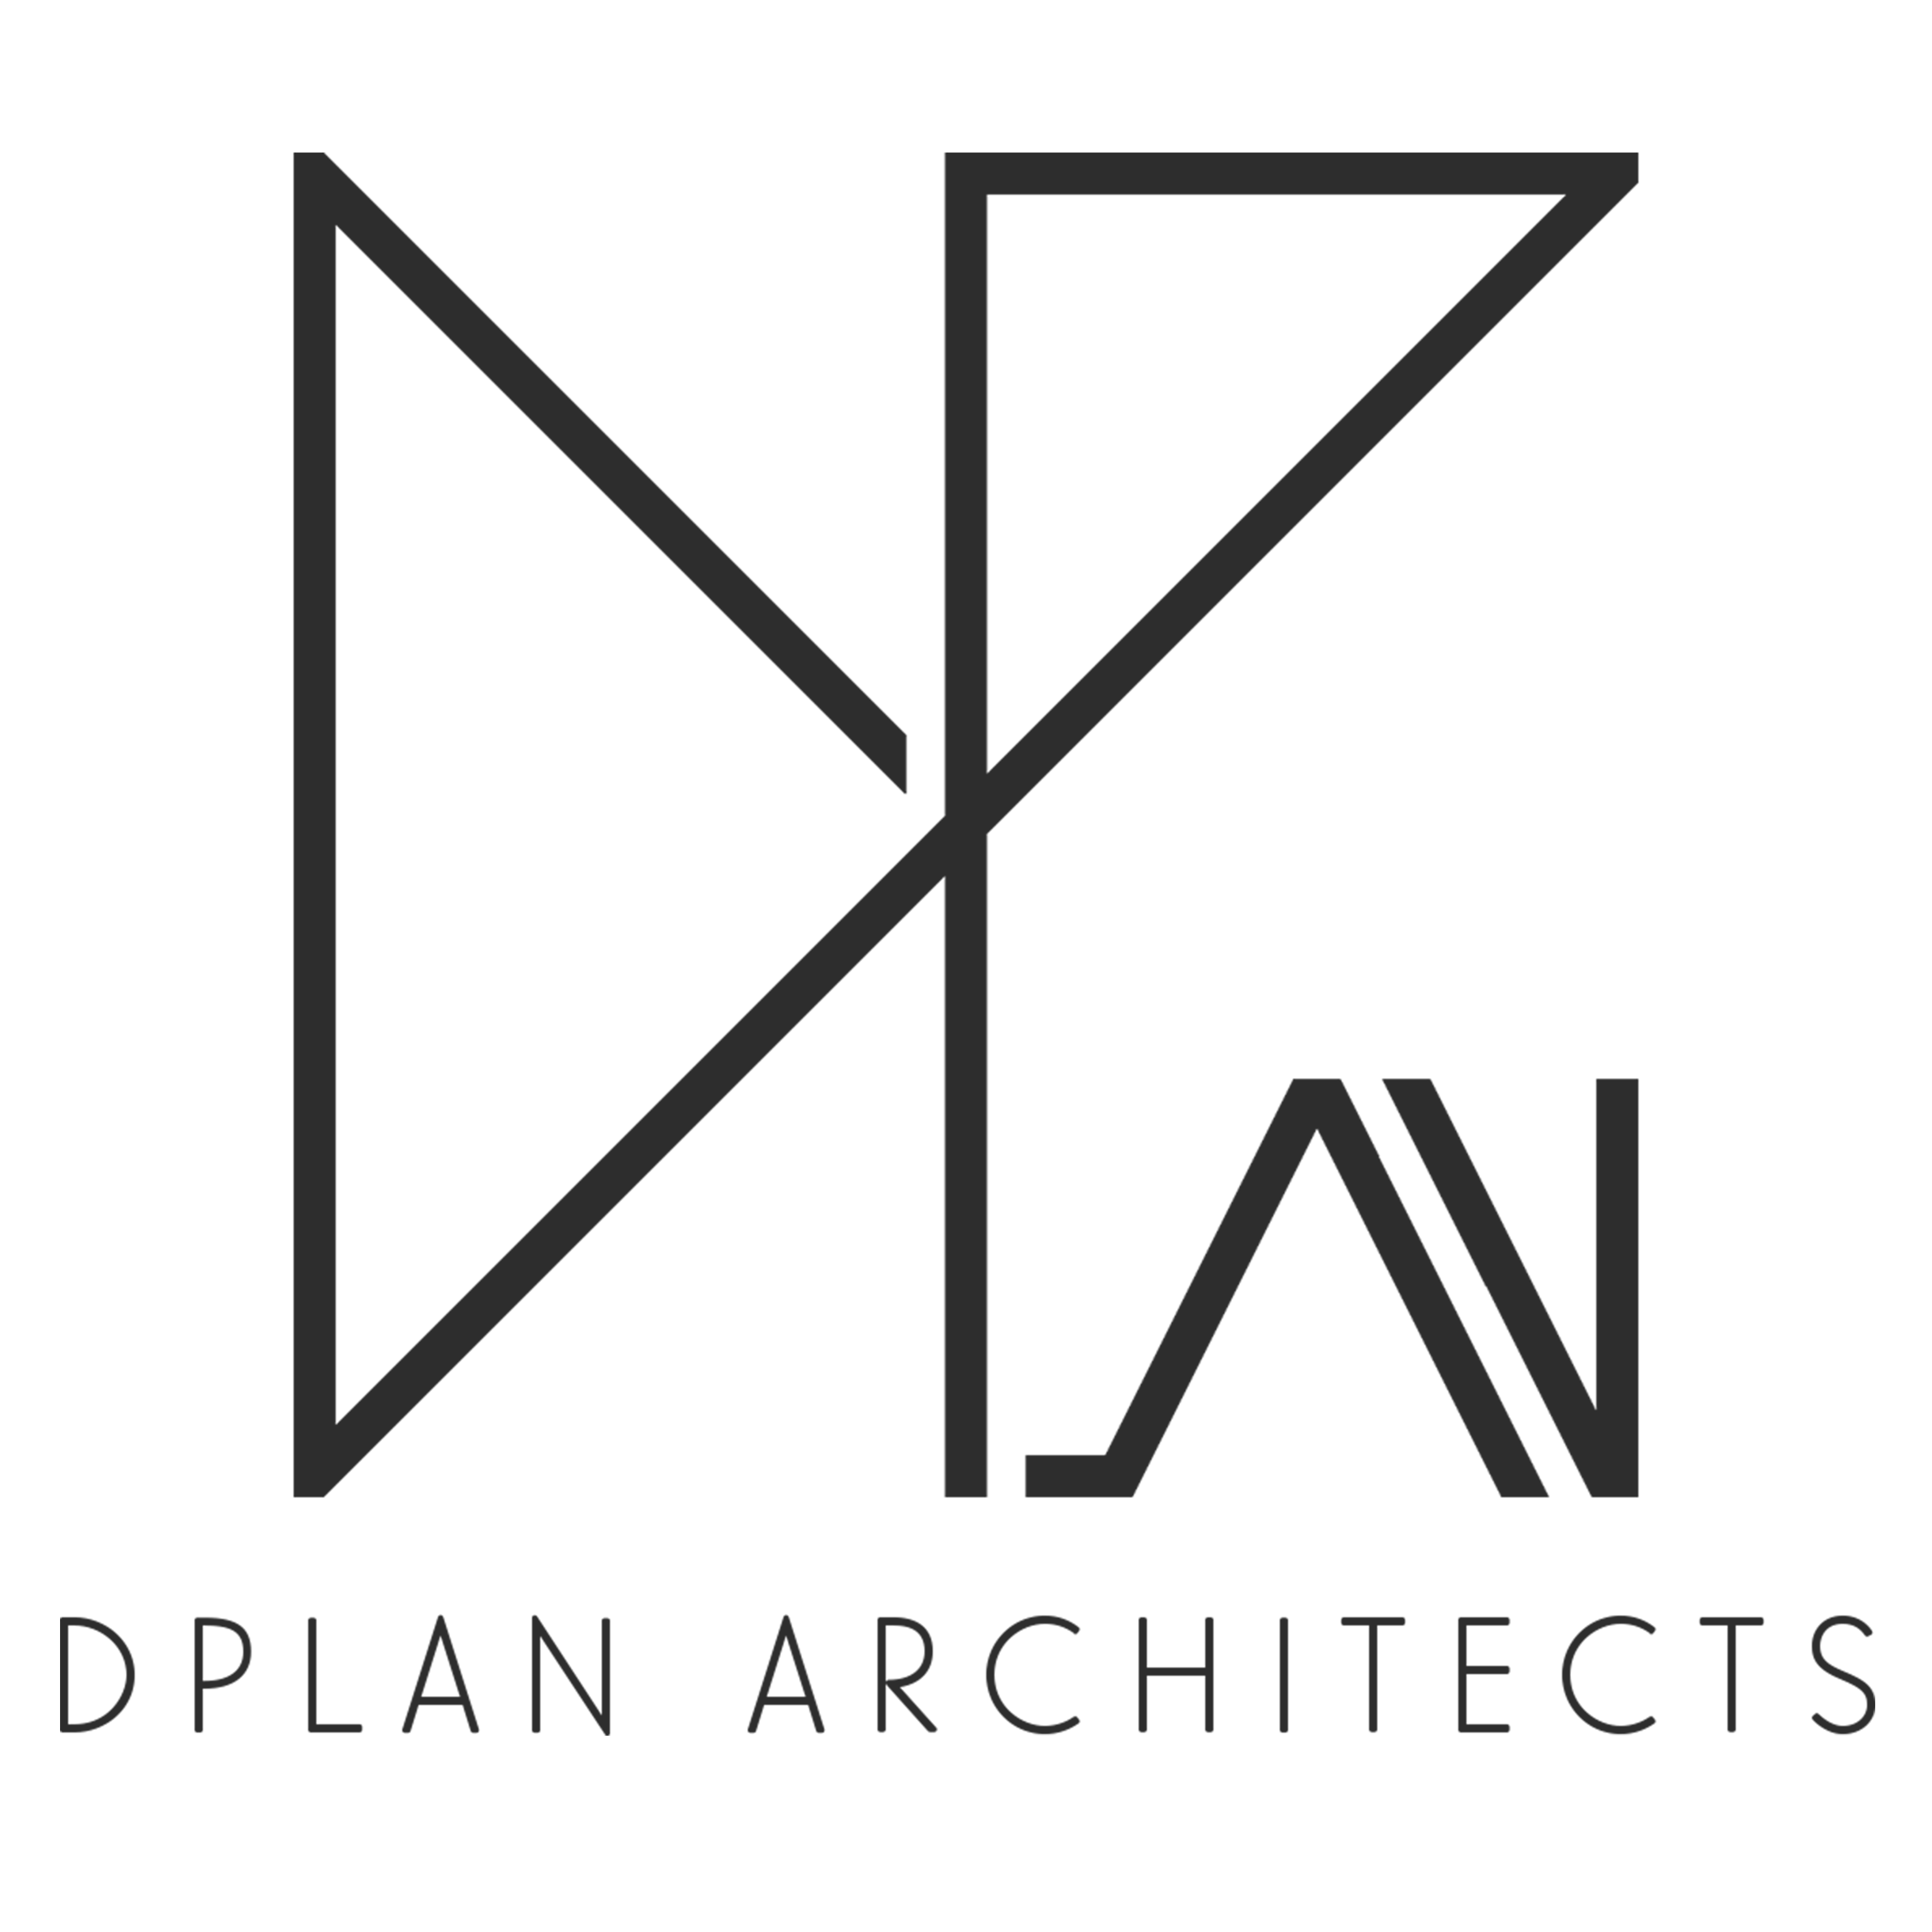 DPlan Architects